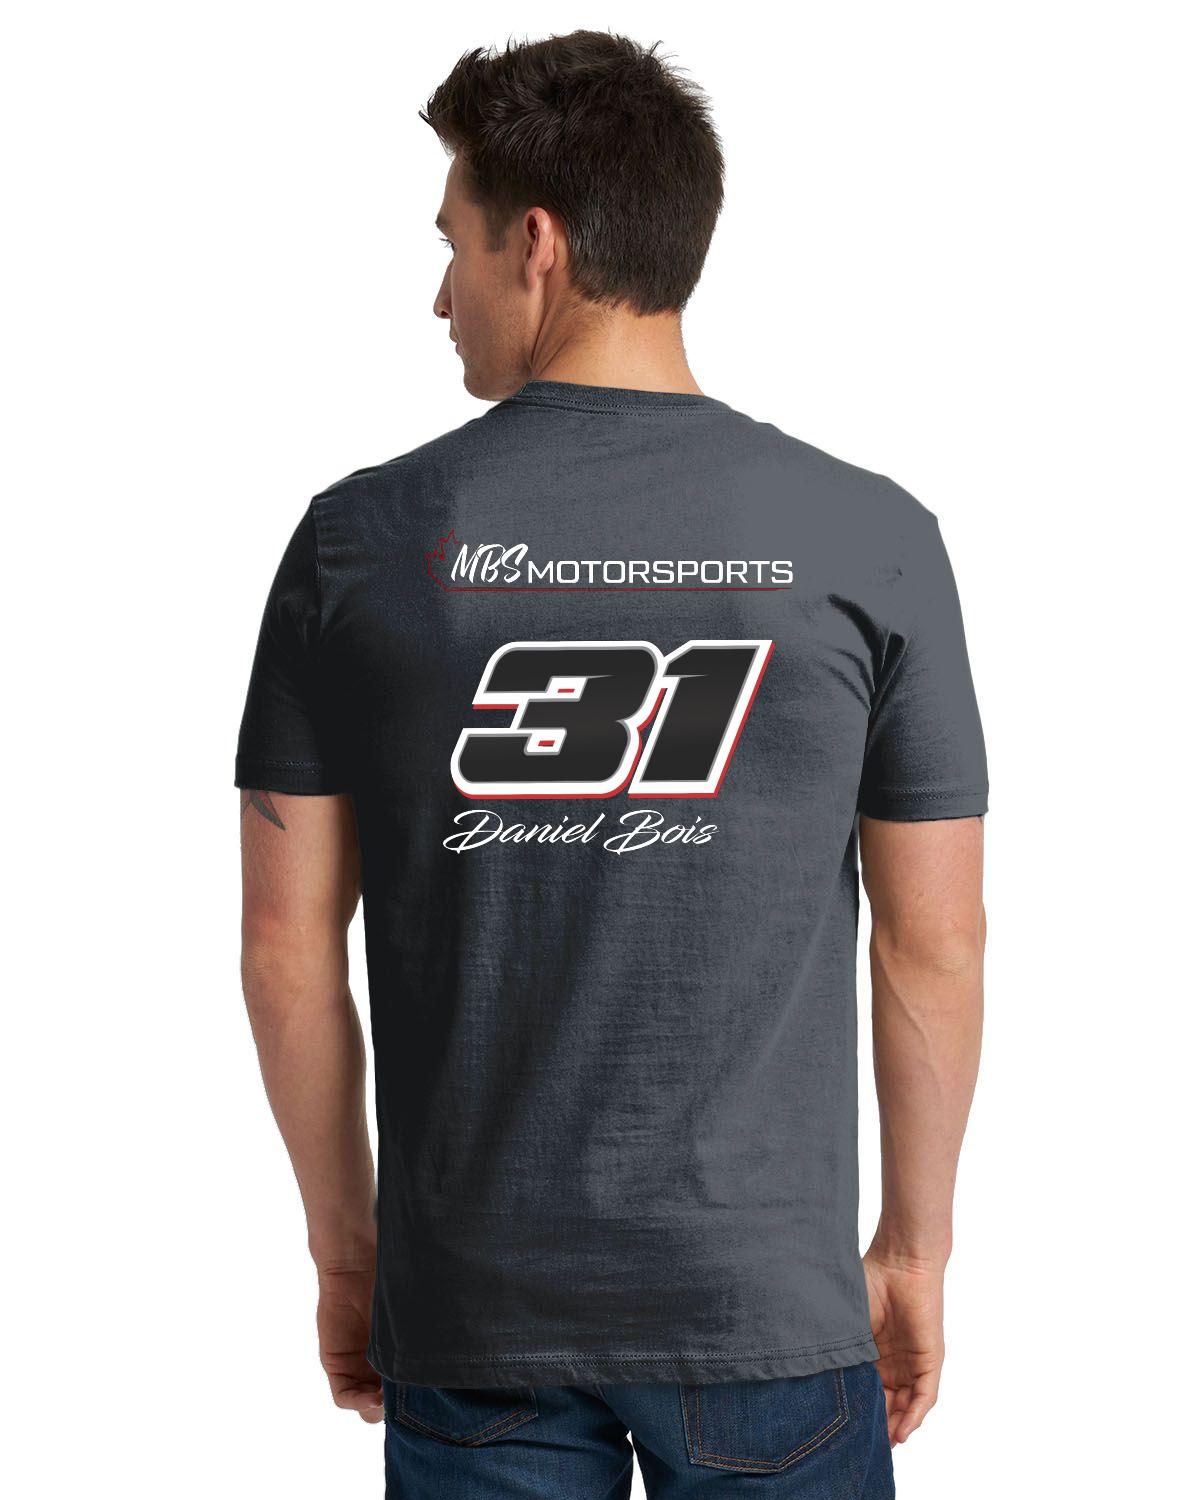 MBS Motorsports / #31 NPS Daniel Bois Tshirt (dark colours)